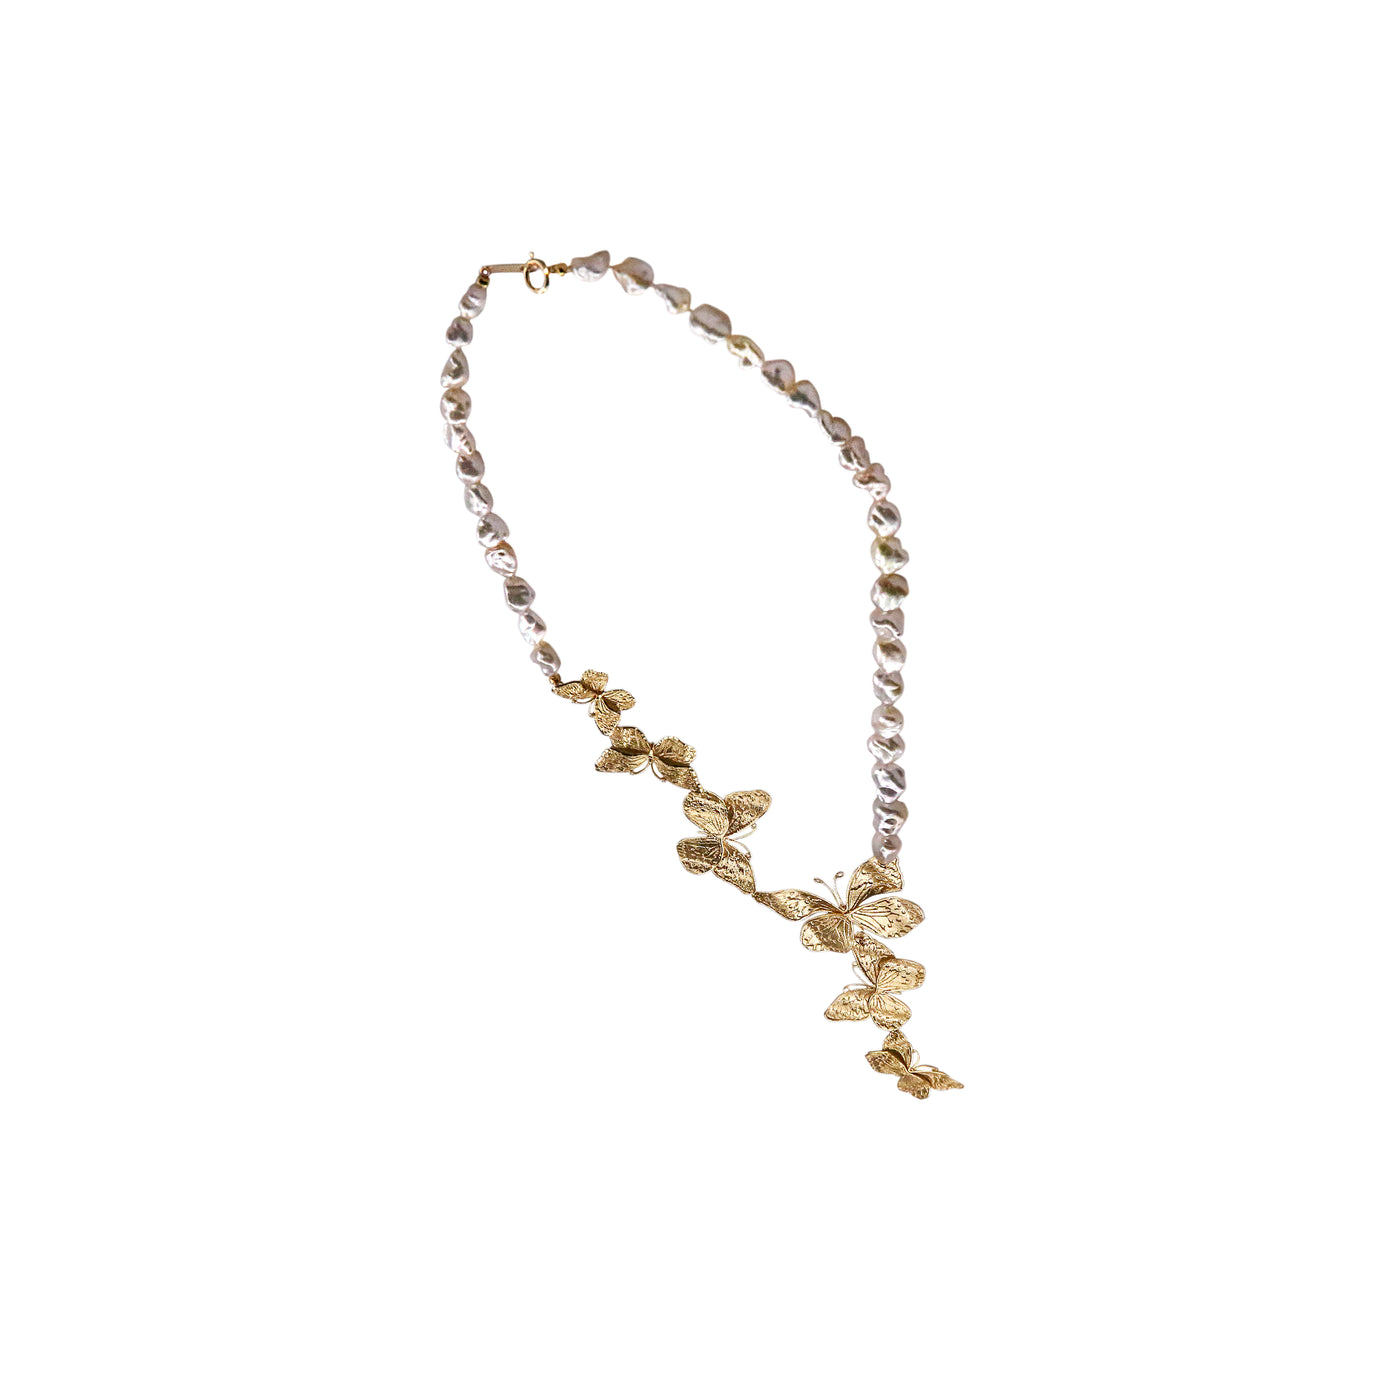 Harmony keshi Pearl Necklace | Angela Jewellery Australia